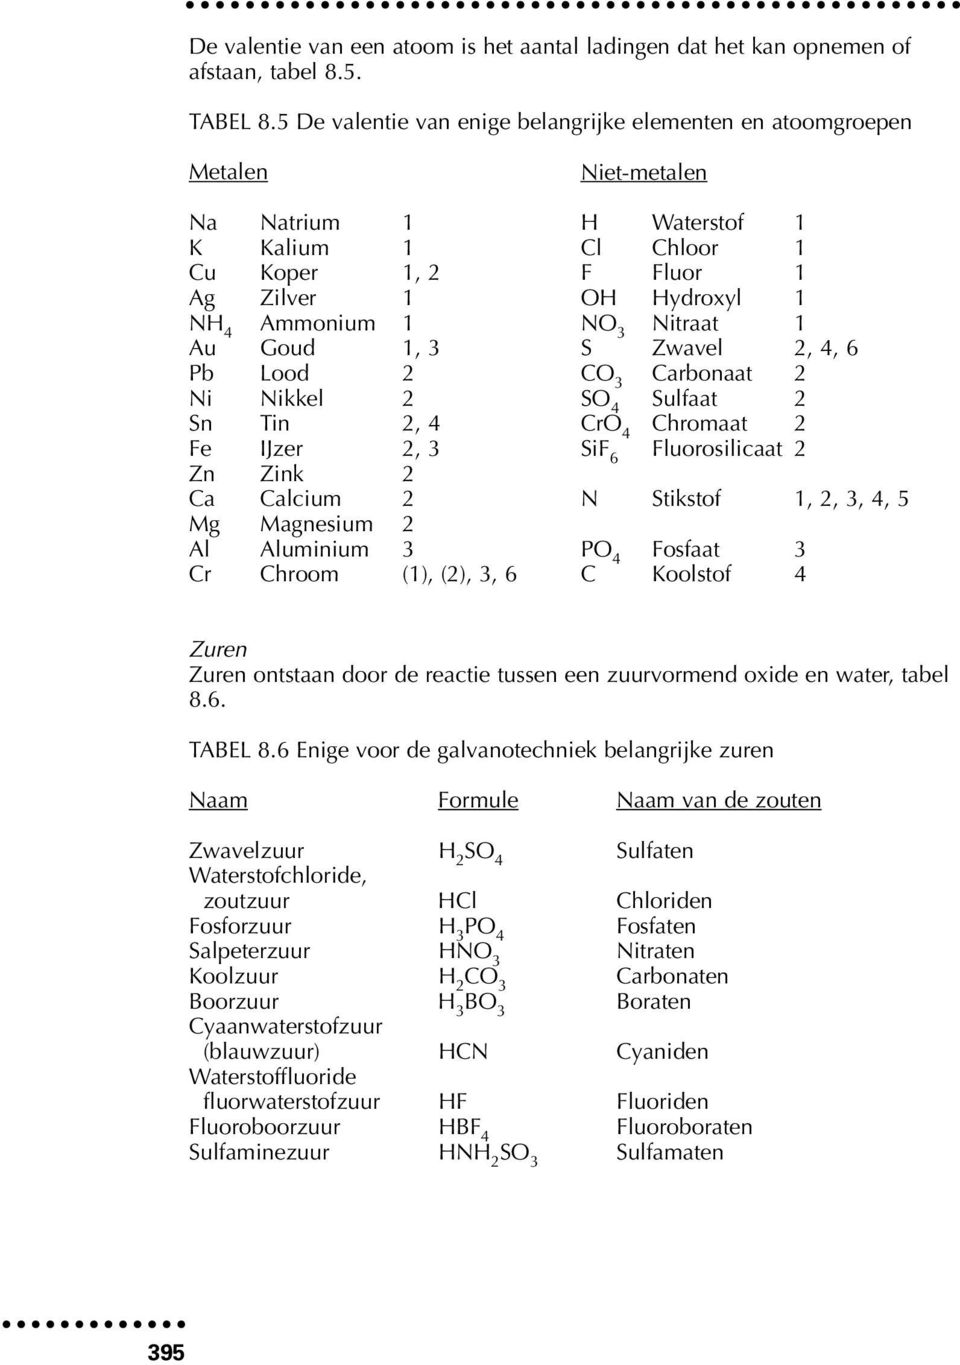 NO 3 Nitraat 1 Au Goud 1, 3 S Zwavel 2, 4, 6 Pb Lood 2 CO 3 Carbonaat 2 Ni Nikkel 2 SO 4 Sulfaat 2 Sn Tin 2, 4 CrO 4 Chromaat 2 Fe IJzer 2, 3 SiF 6 Fluorosilicaat 2 Zn Zink 2 Ca Calcium 2 N Stikstof